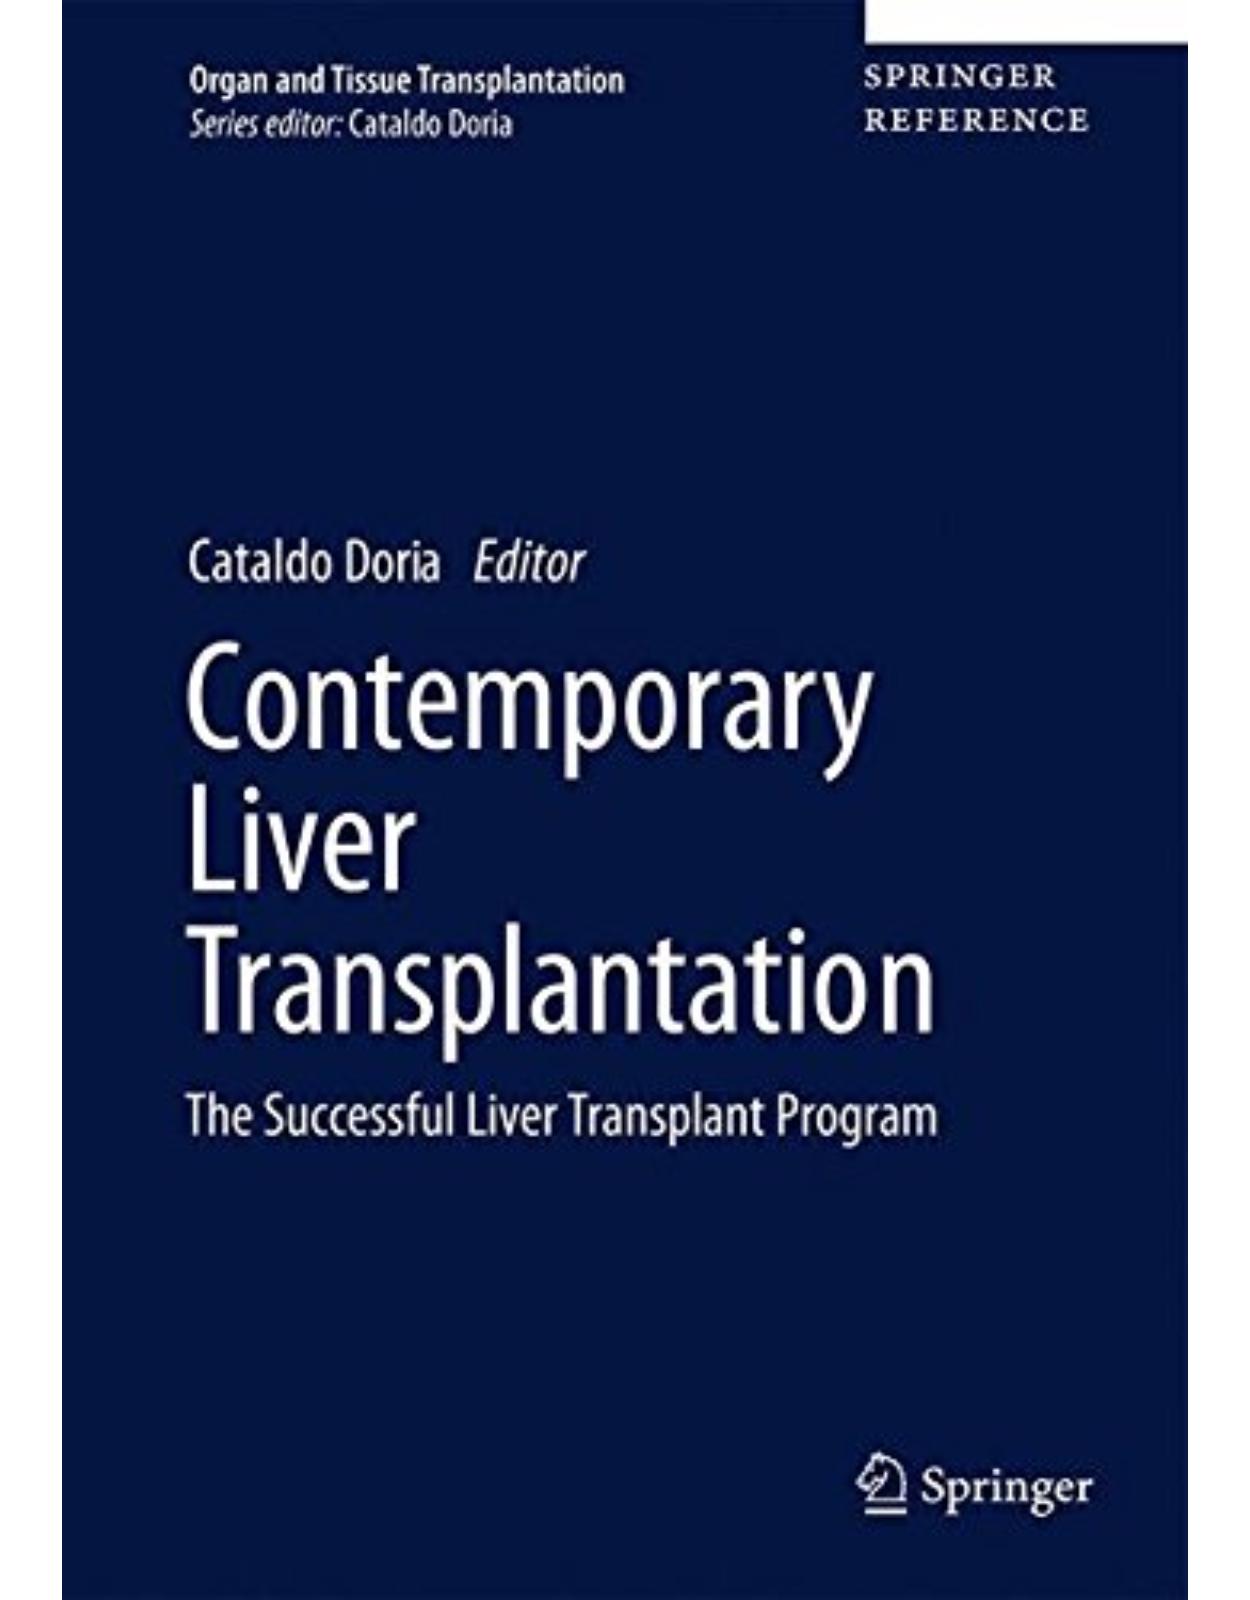 Contemporary Liver Transplantation: The Successful Liver Transplant Program (Organ and Tissue Transplantation) 